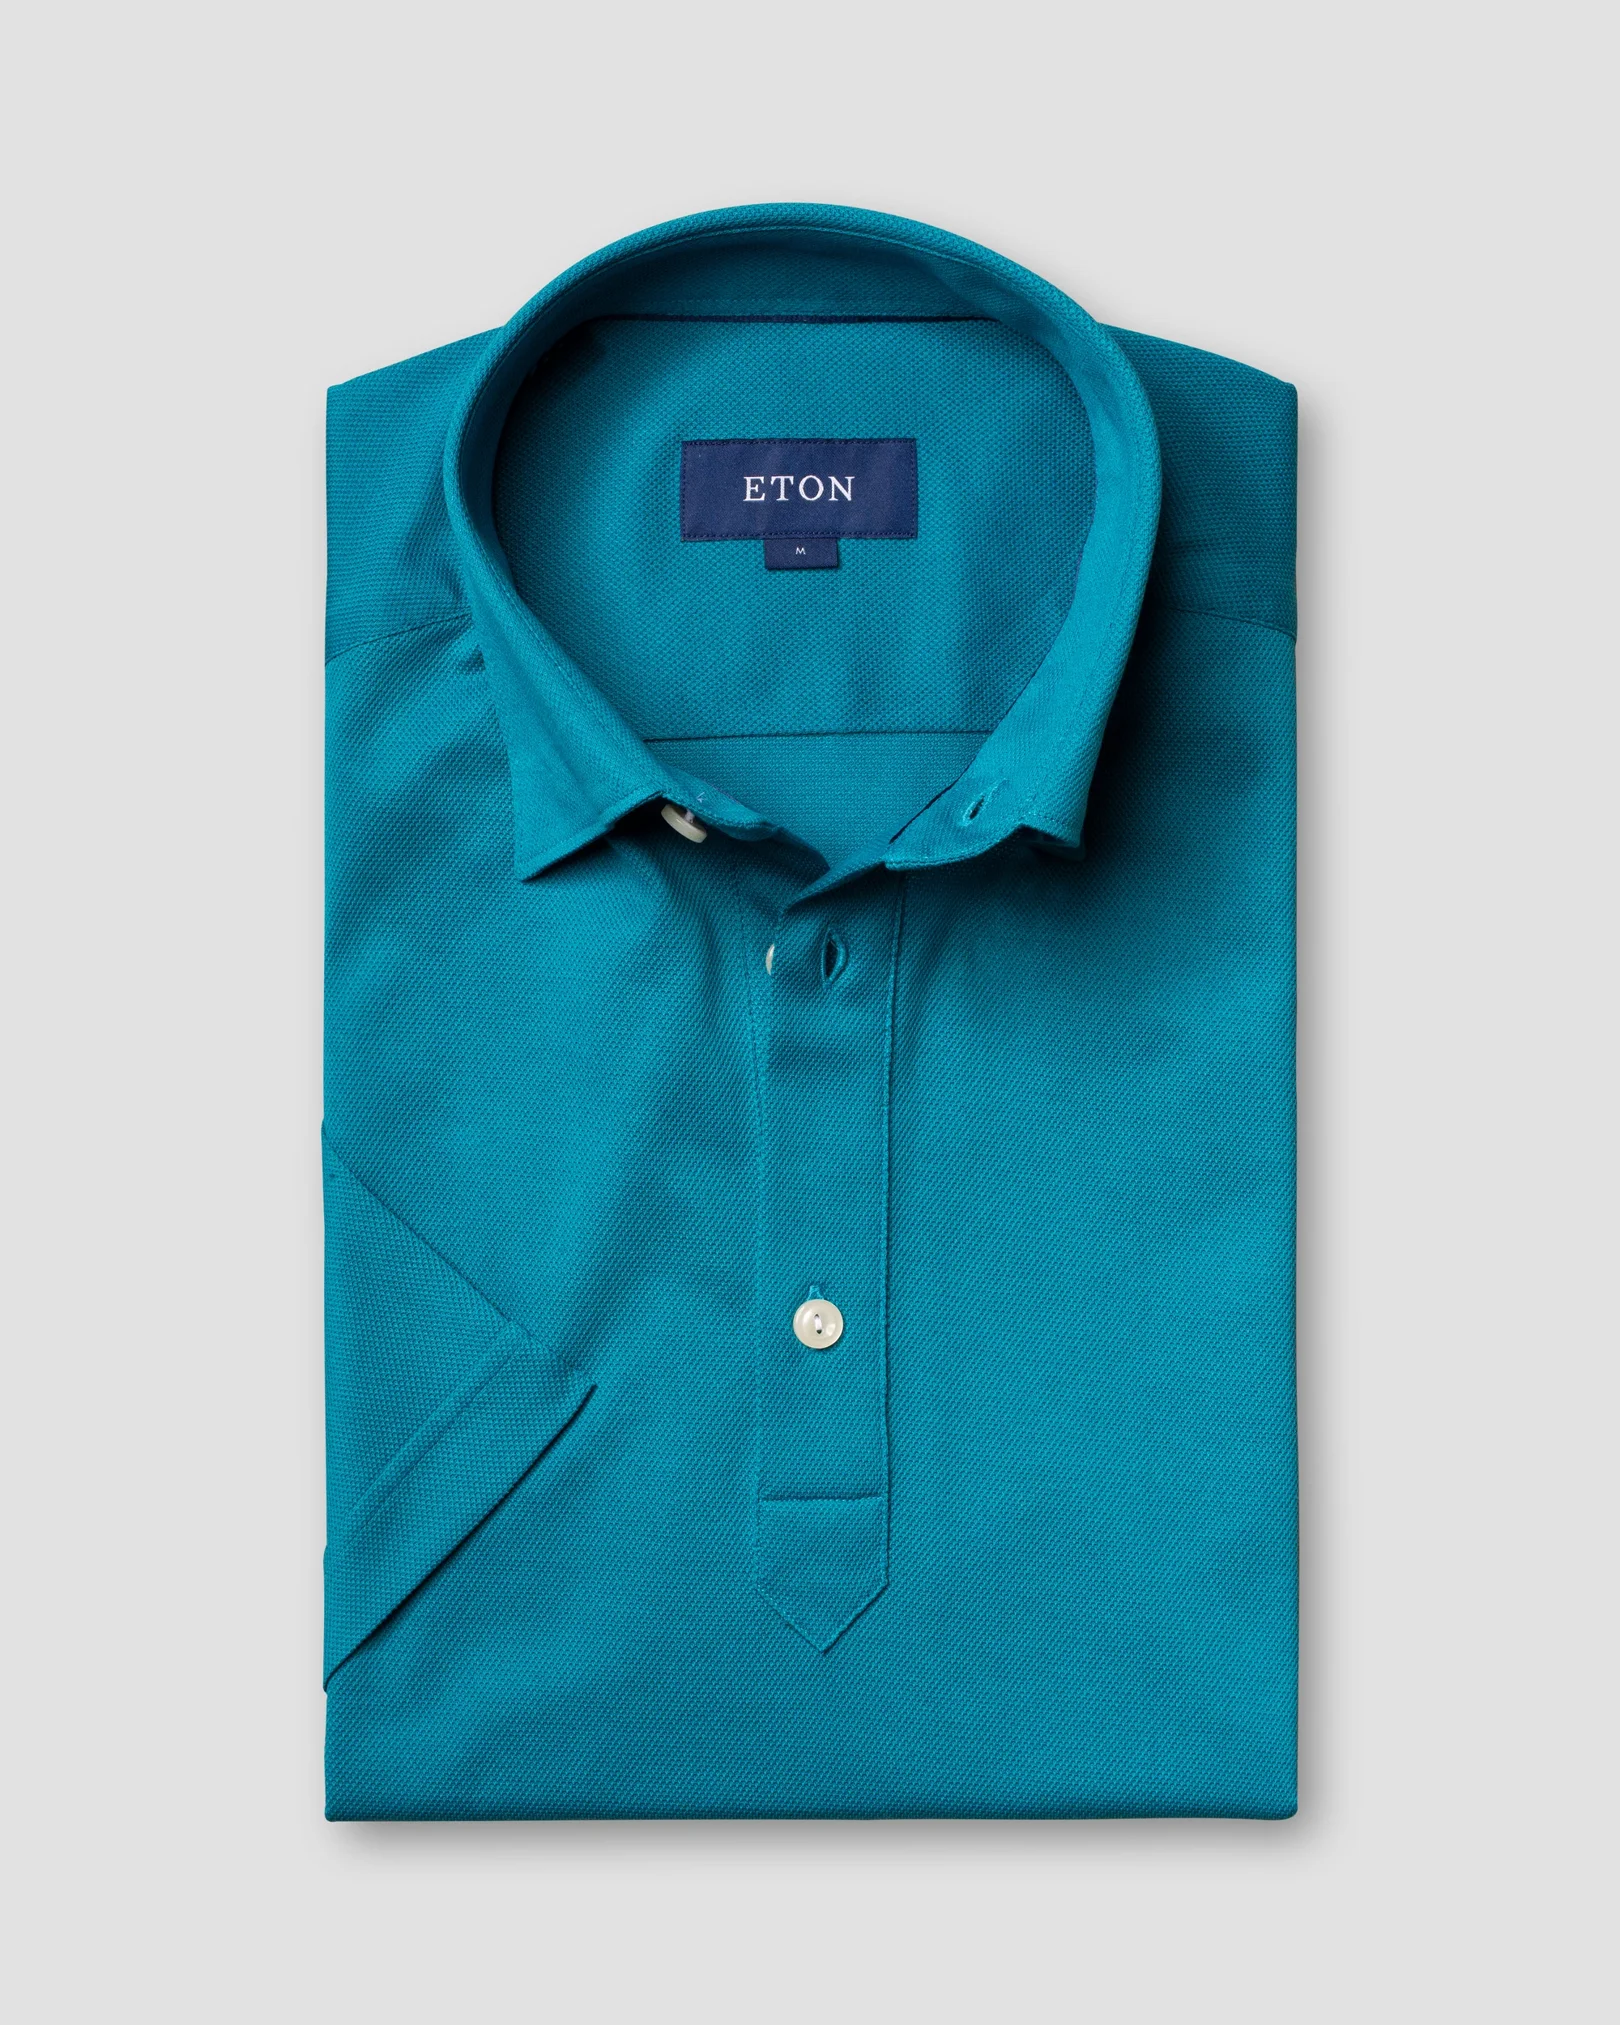 Eton - teal polo shirt short sleeved